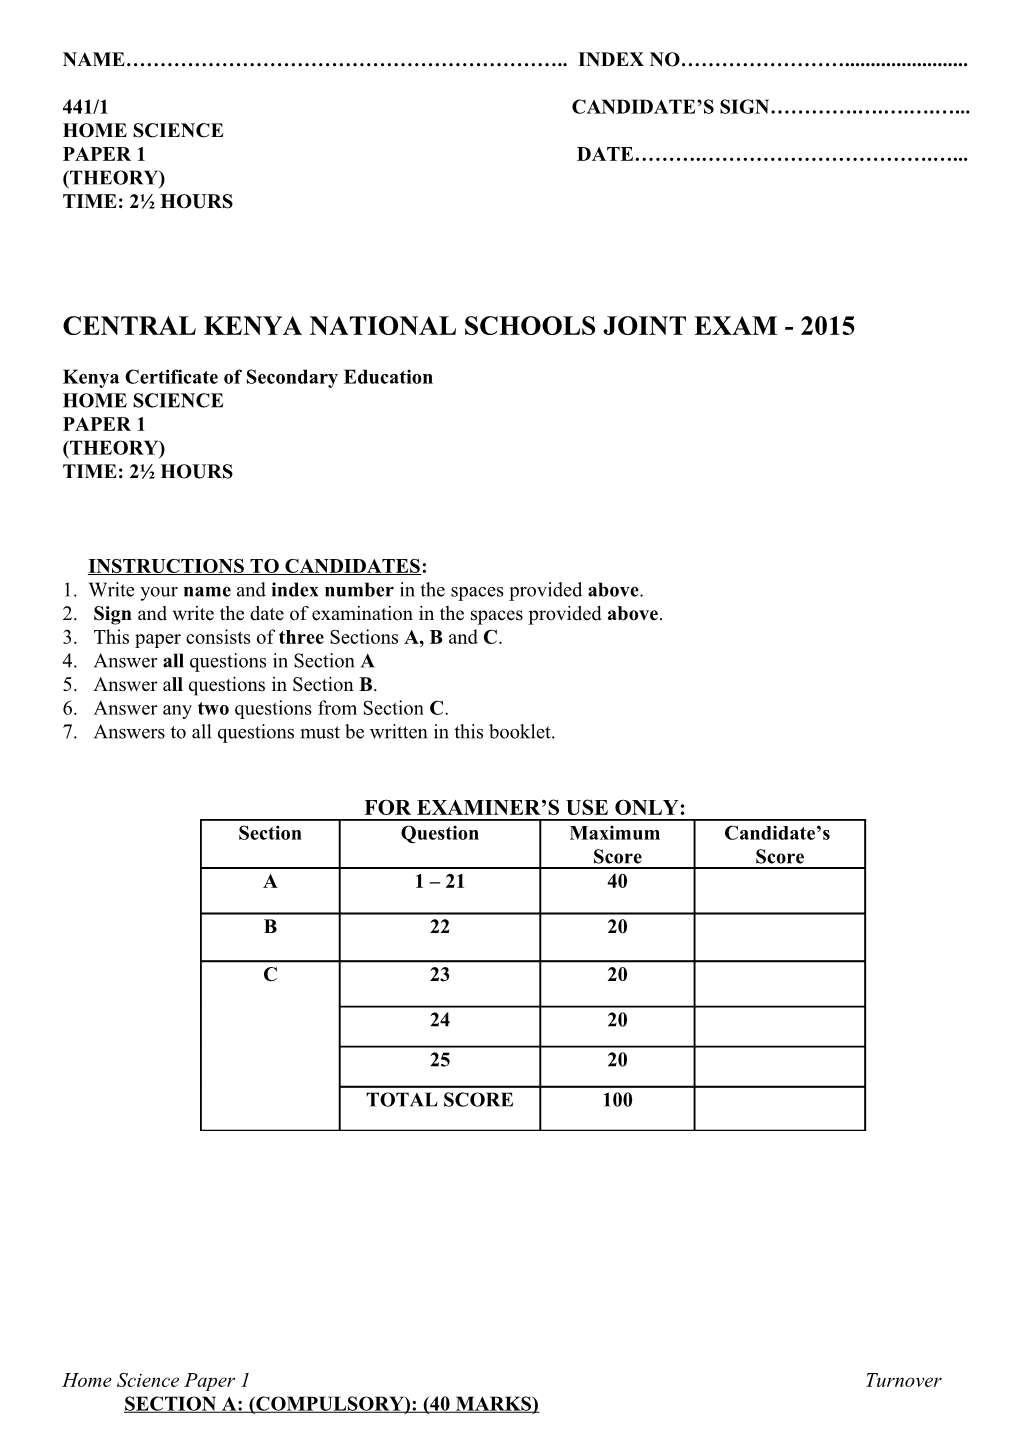 Central Kenya National Schools Joint Exam - 2015